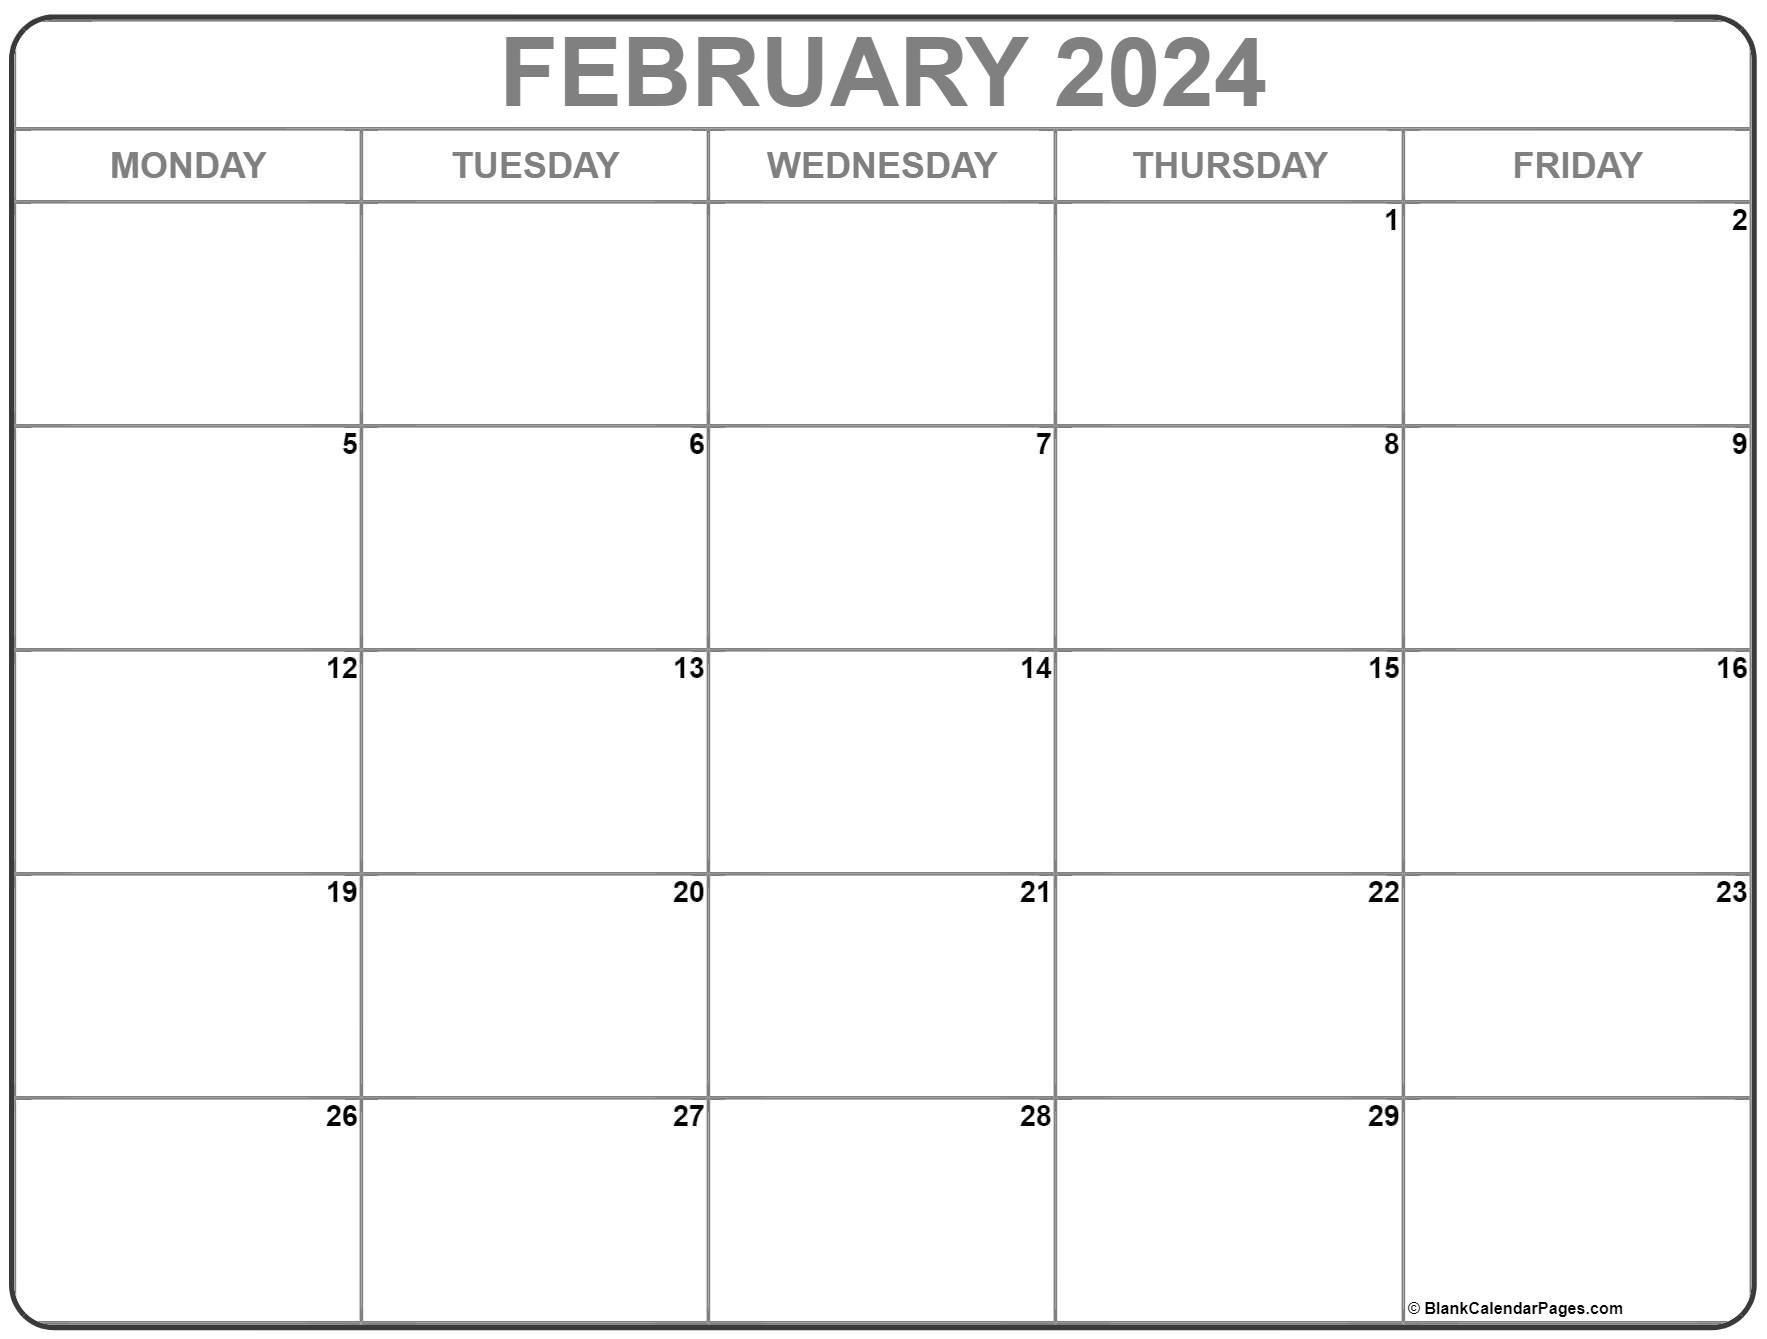 Friday 2024 Calendar Calendar 2024